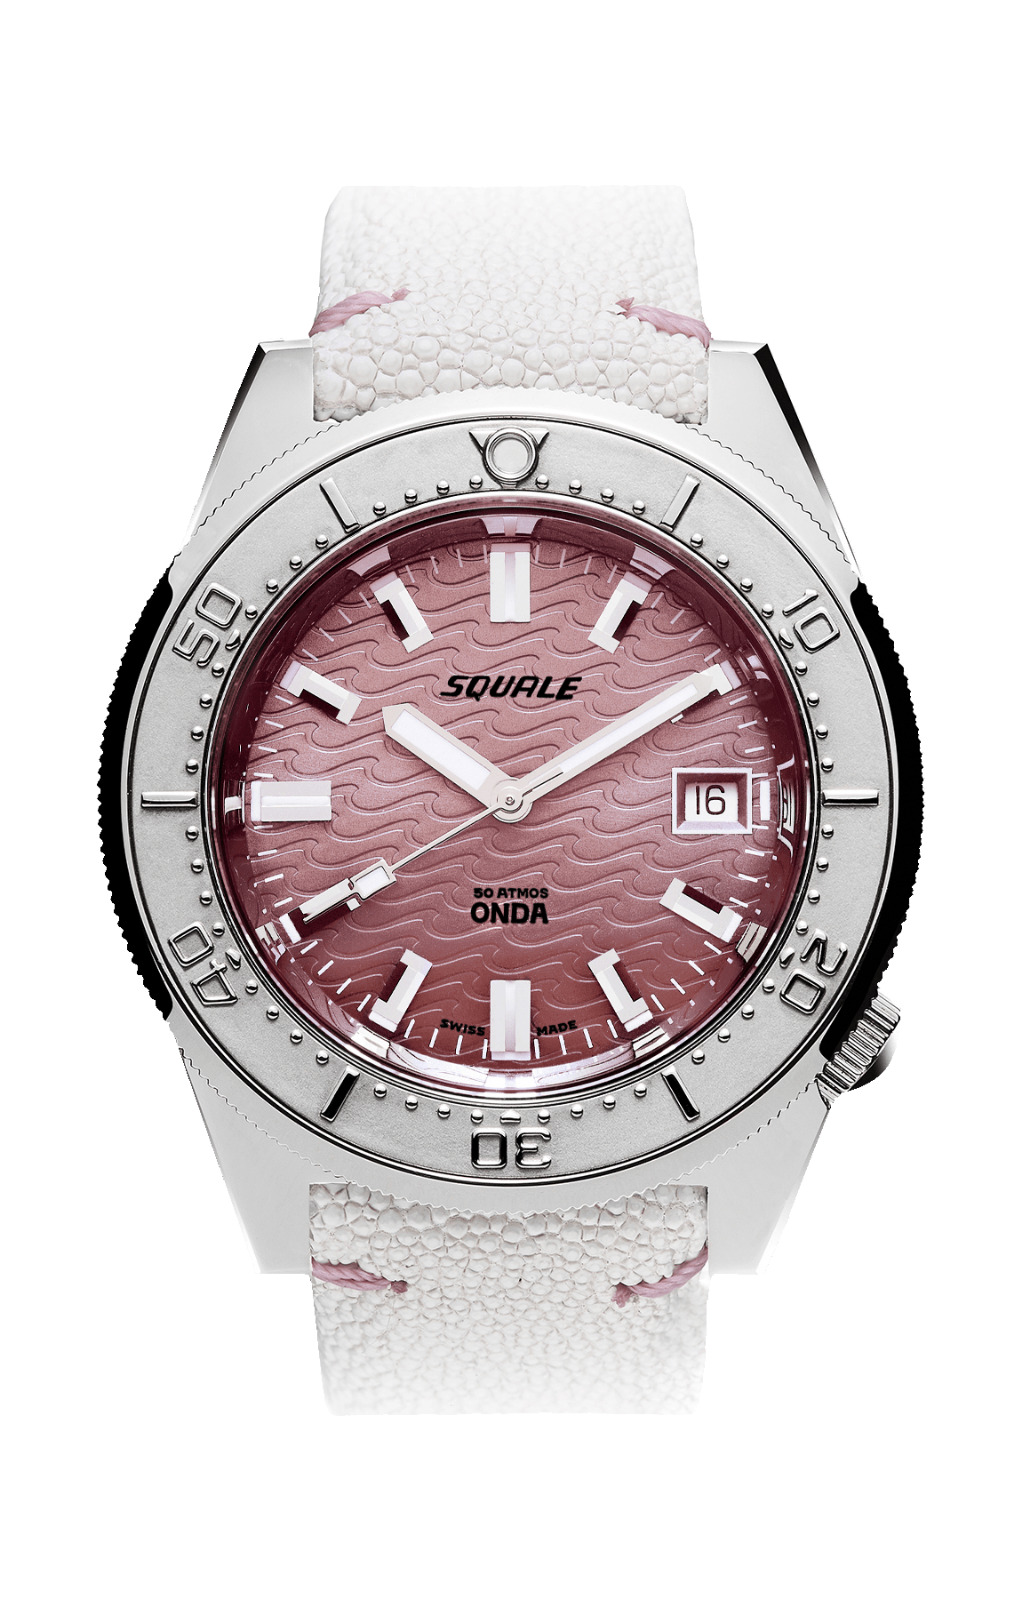 Brand New Squale 50 ATMOS Onda Pink (Rosa) 1521 PK Watch - 2 Year Warranty